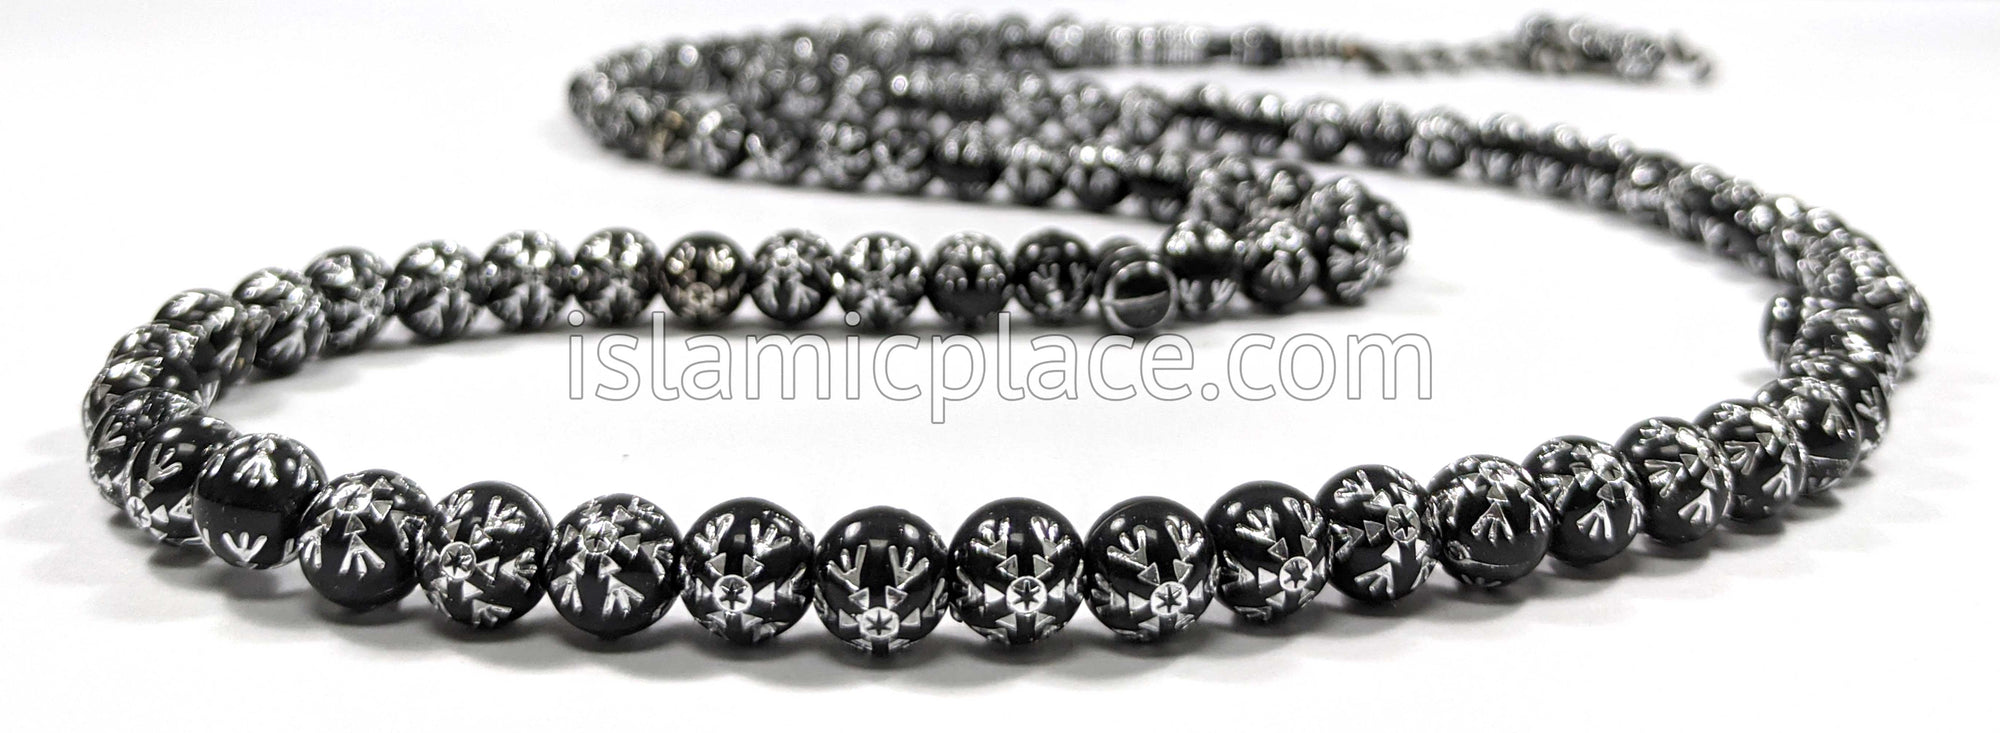 Black - Crystal Design Tasbih Prayer Beads